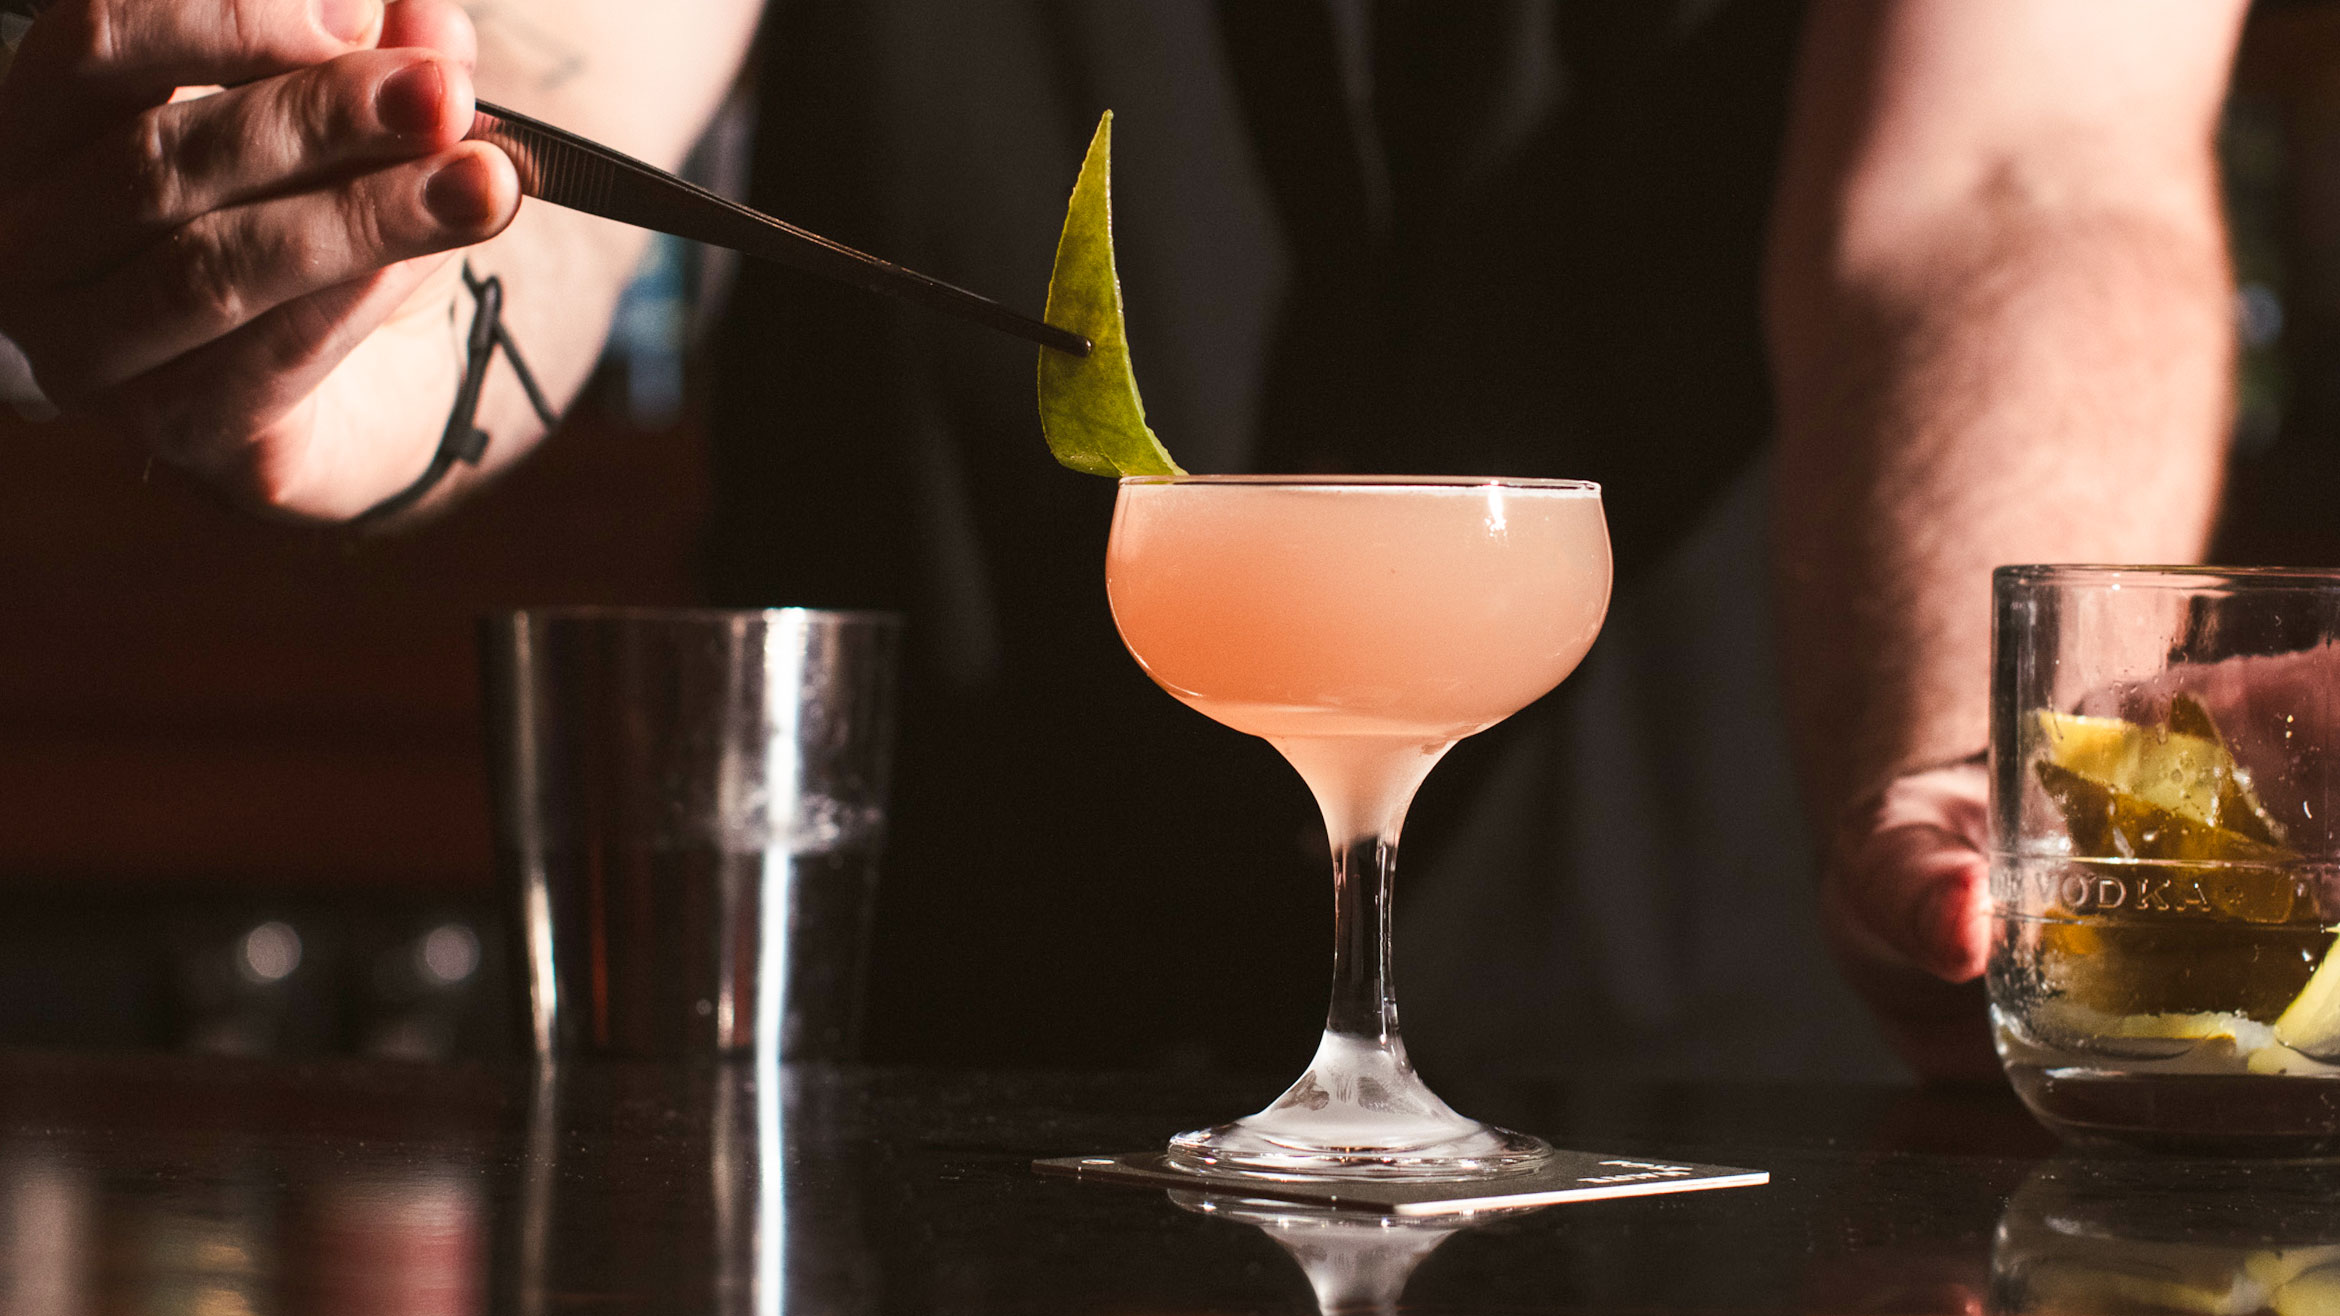 A bartender garnishes a cocktail with leaf